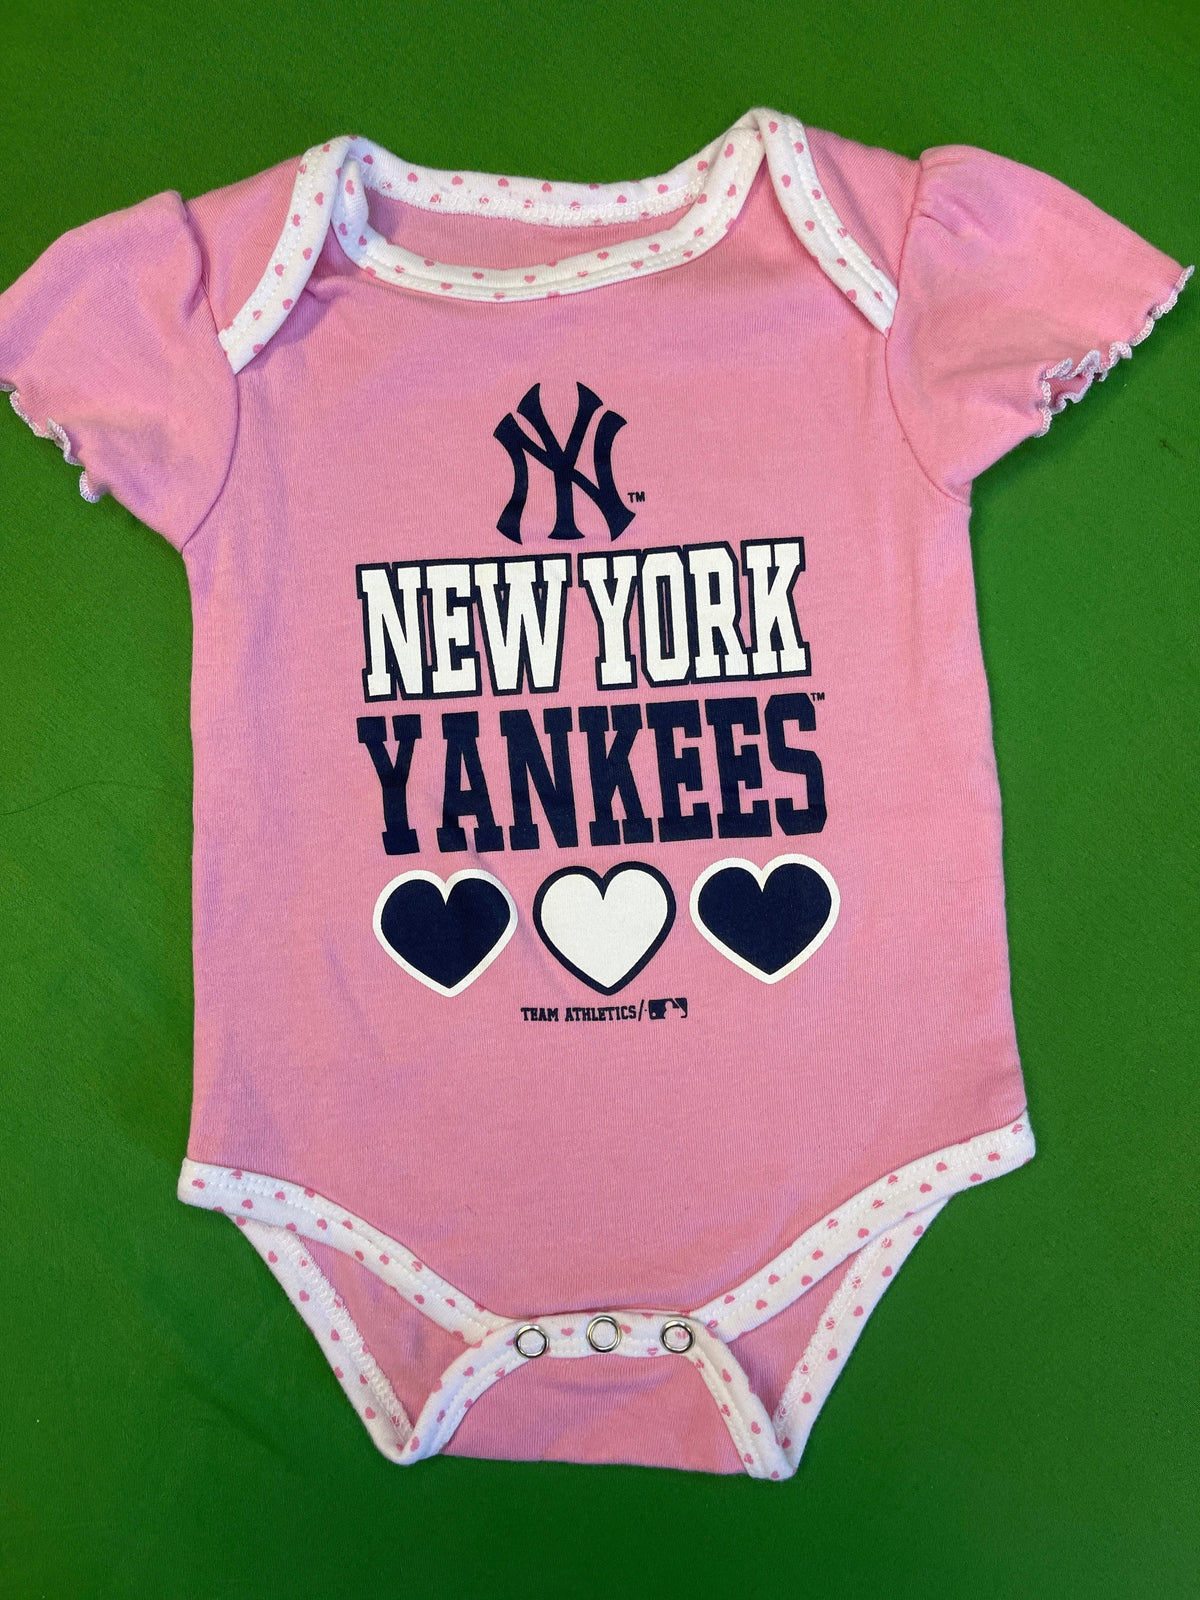 MLB New York Yankees Baby Pink Bodysuit 0-3 months